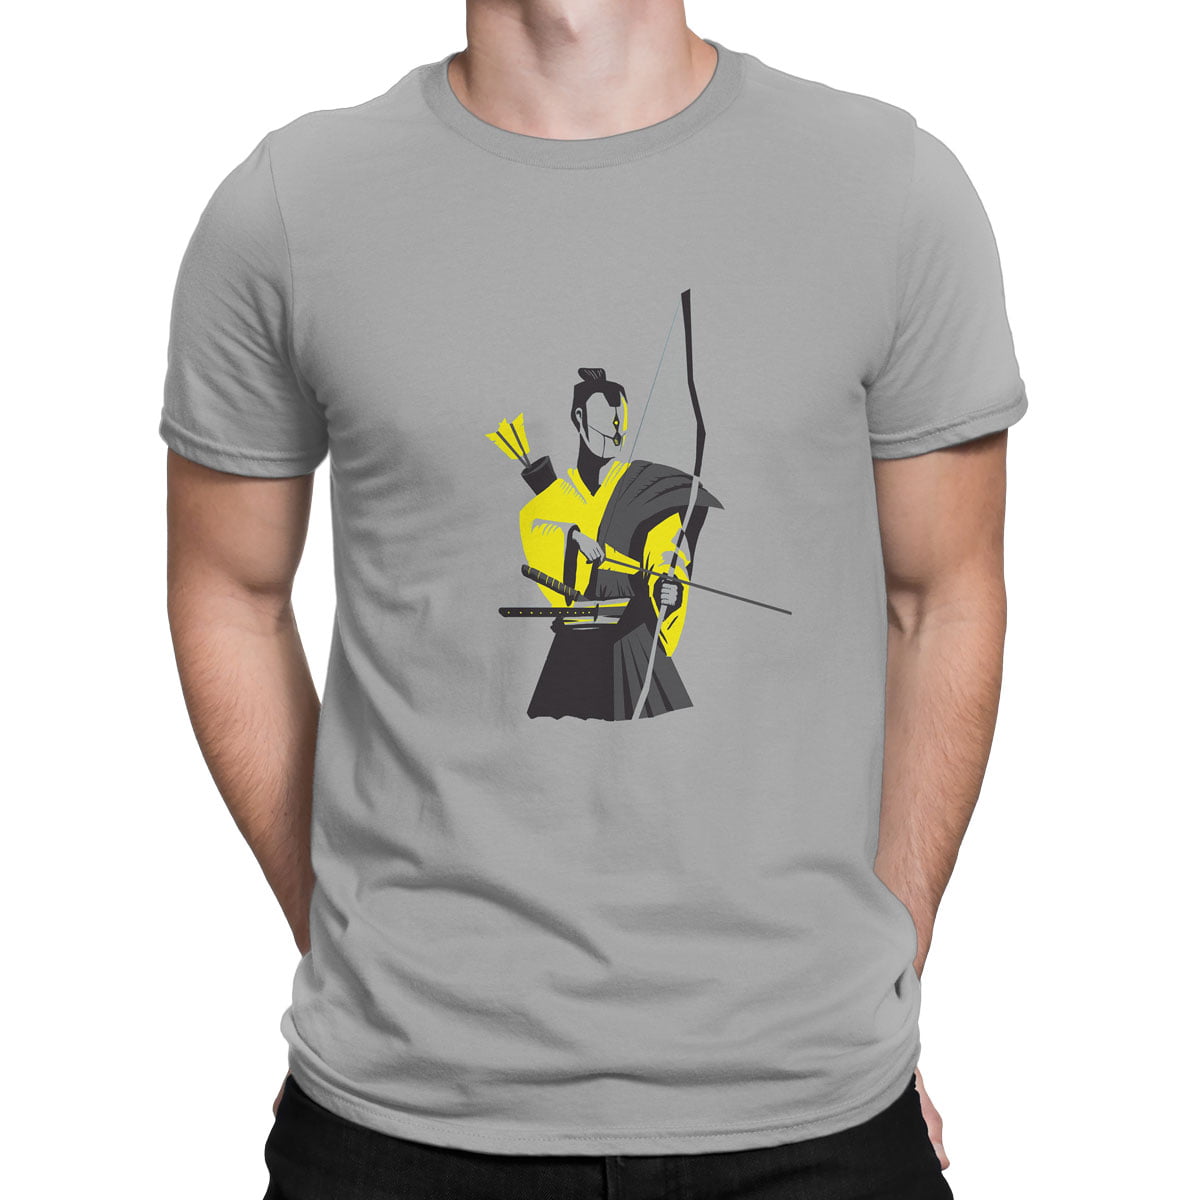 Cyberpunk 2 shirt g erkek - cyberpunk no2 baskılı erkek t-shirt - figurex